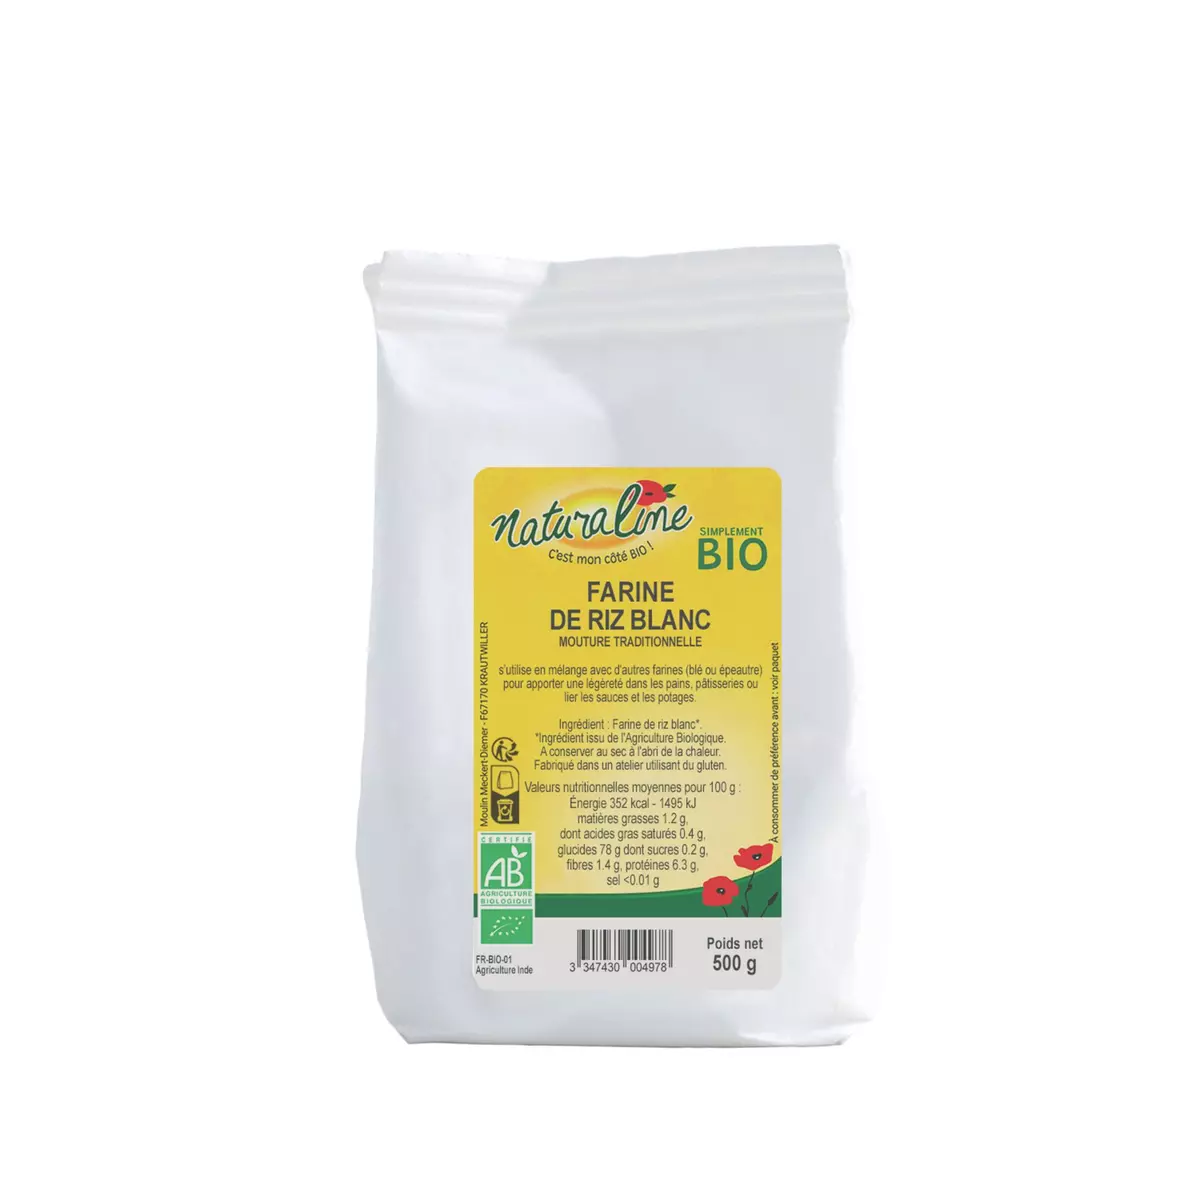 NATURALINE Farine de riz blanc bio 500g